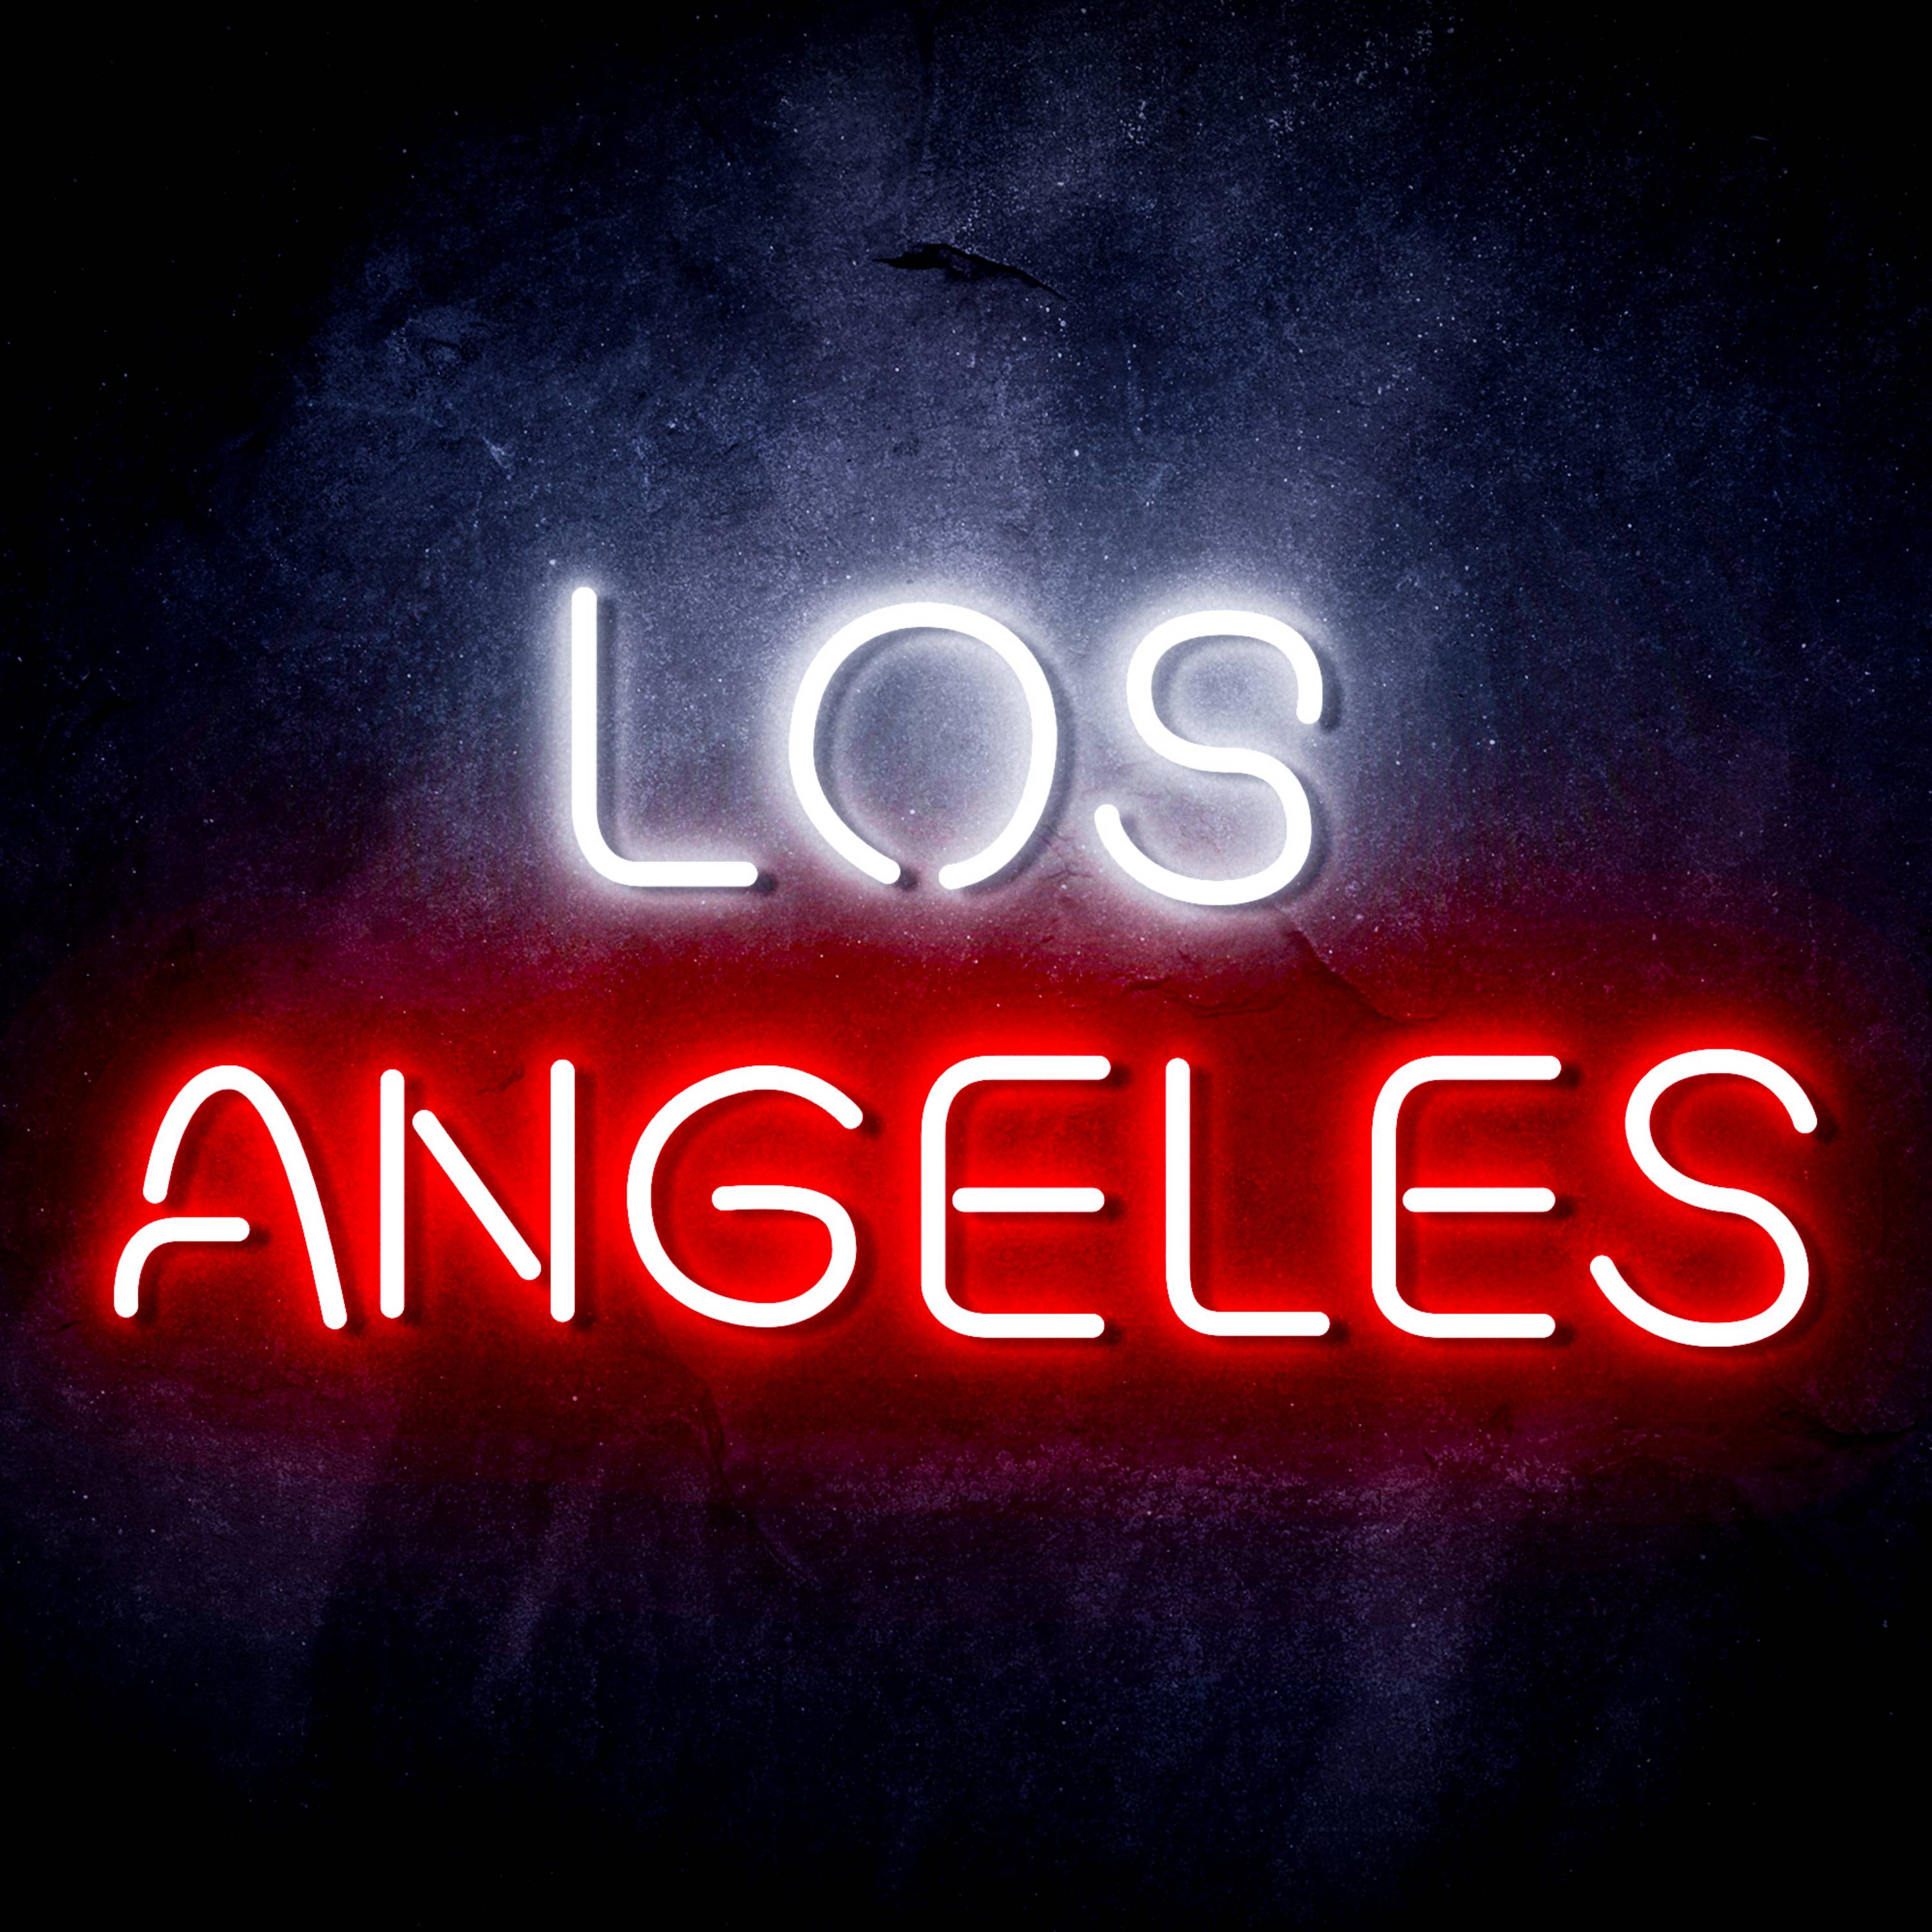 NHL Los Angeles Kings LED Neon Sign